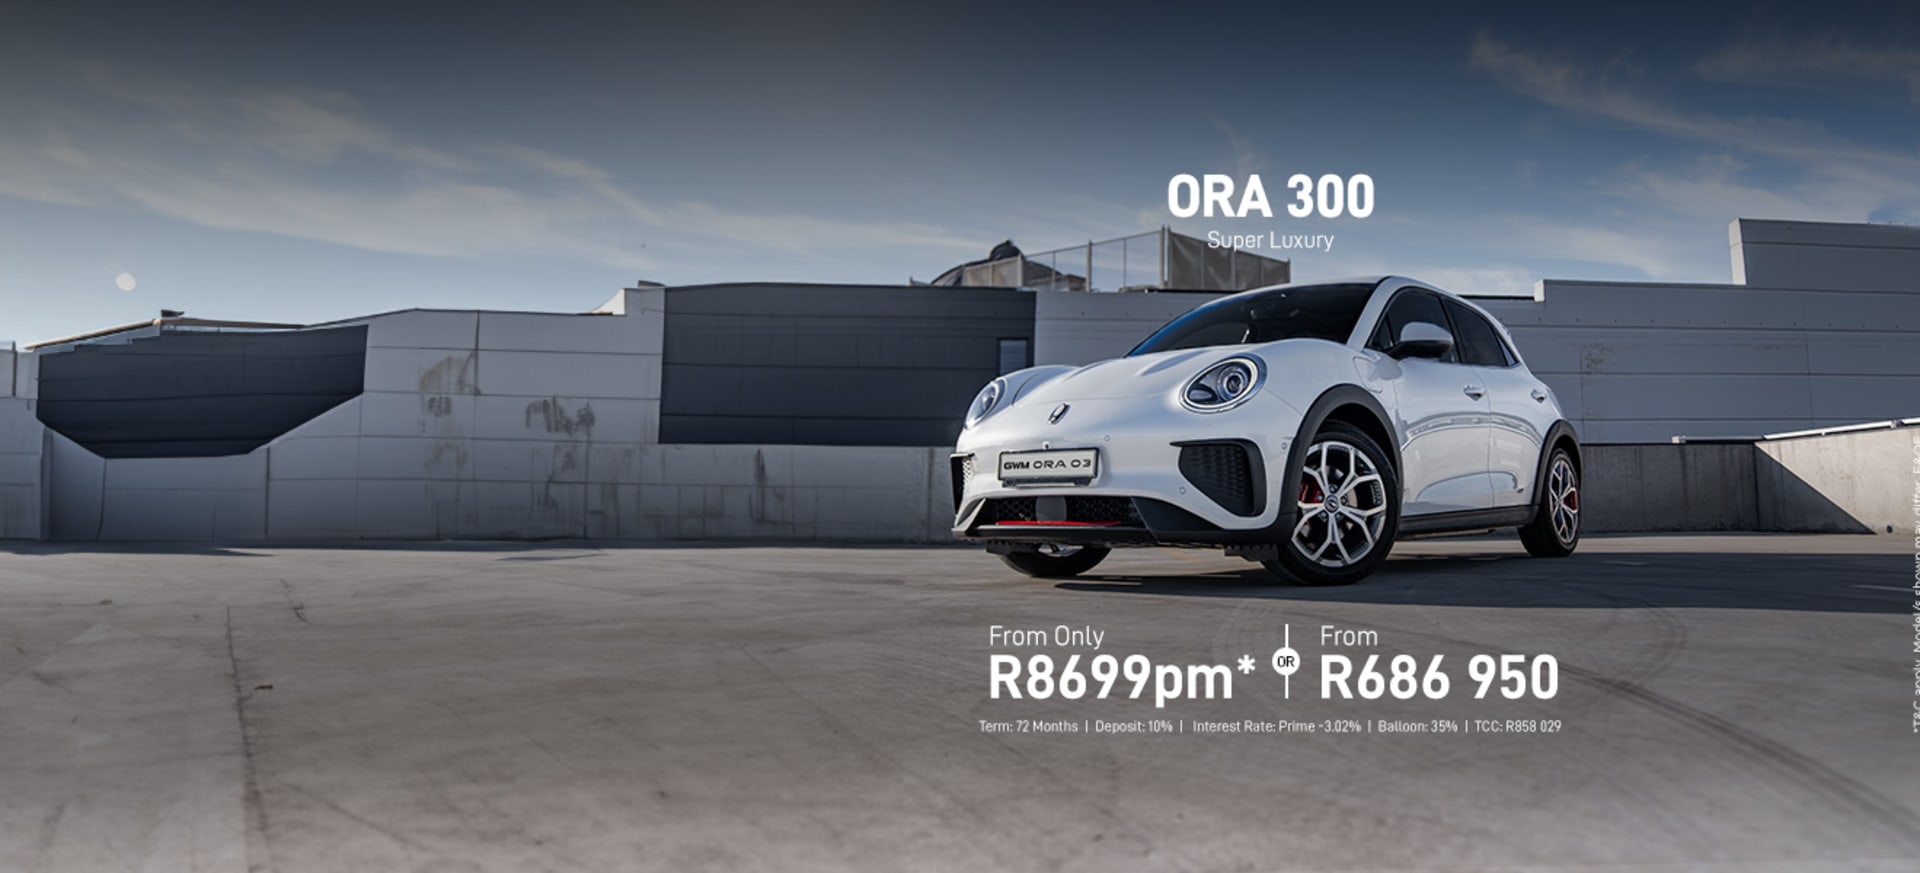 ORA 300 Super Luxury From R8 699pm*